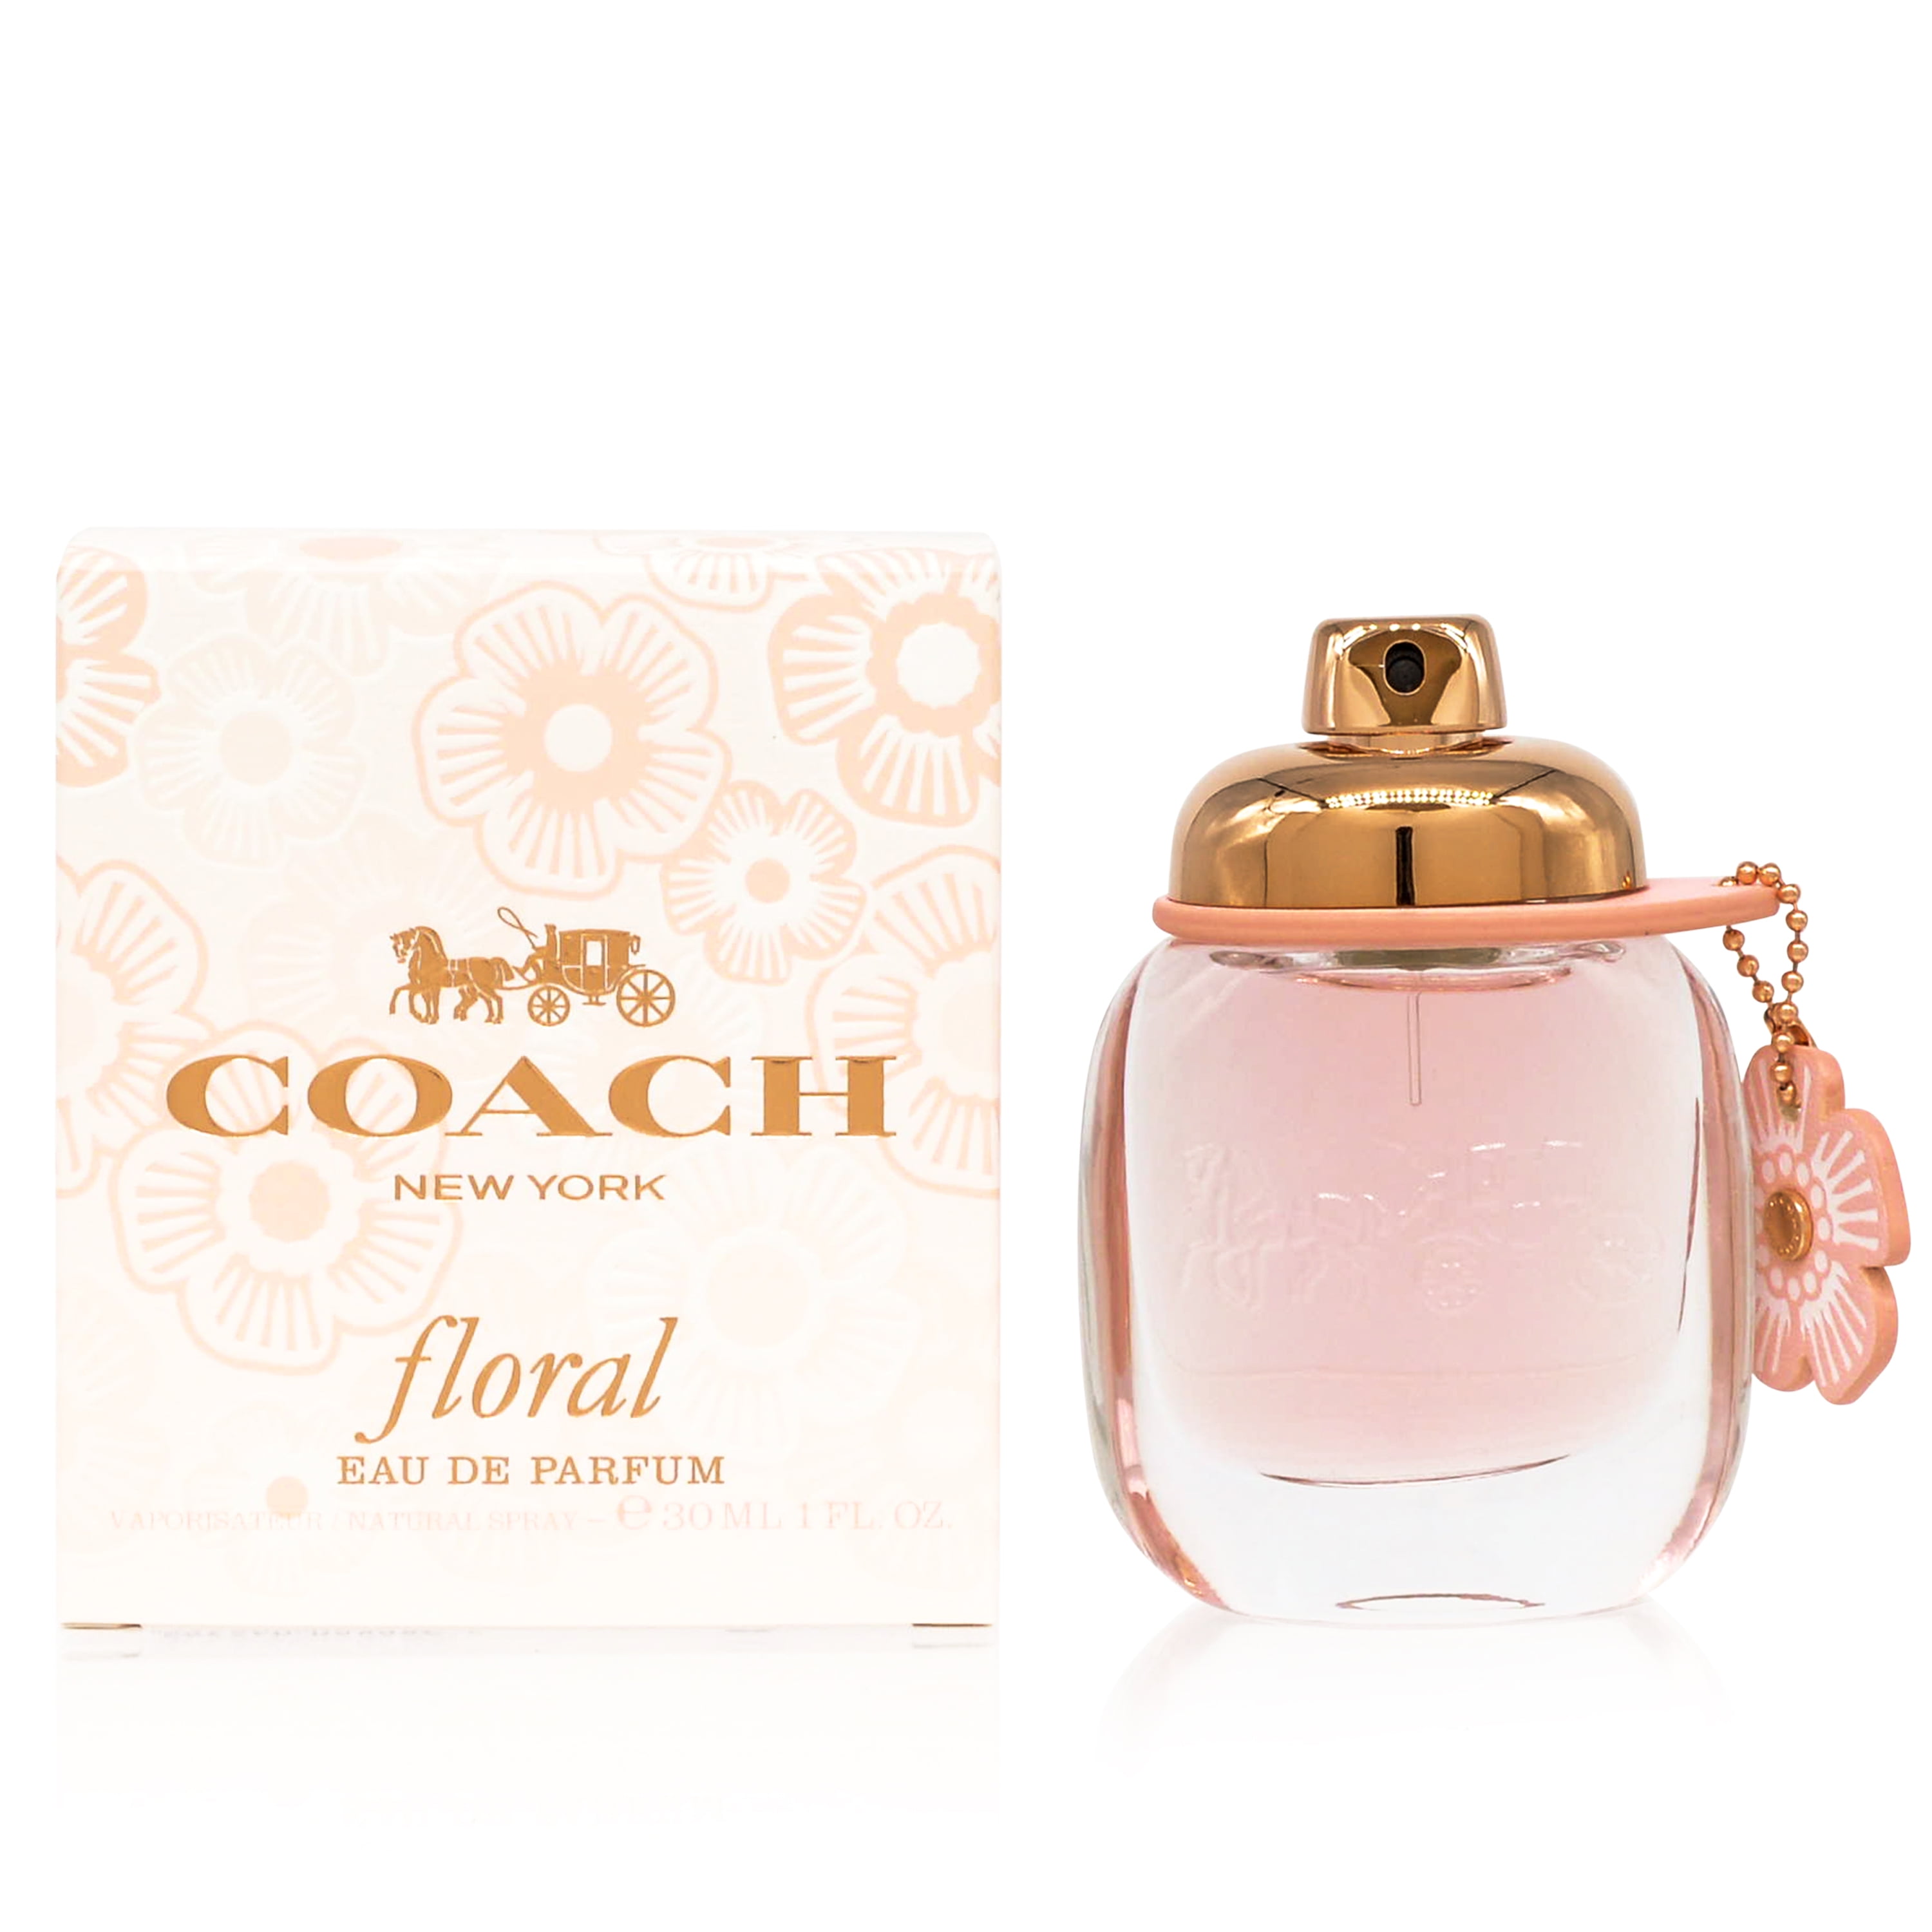 Adiccion loto fuga Coach Floral Eau de Parfum, Perfume for Women, 1 Oz - Walmart.com